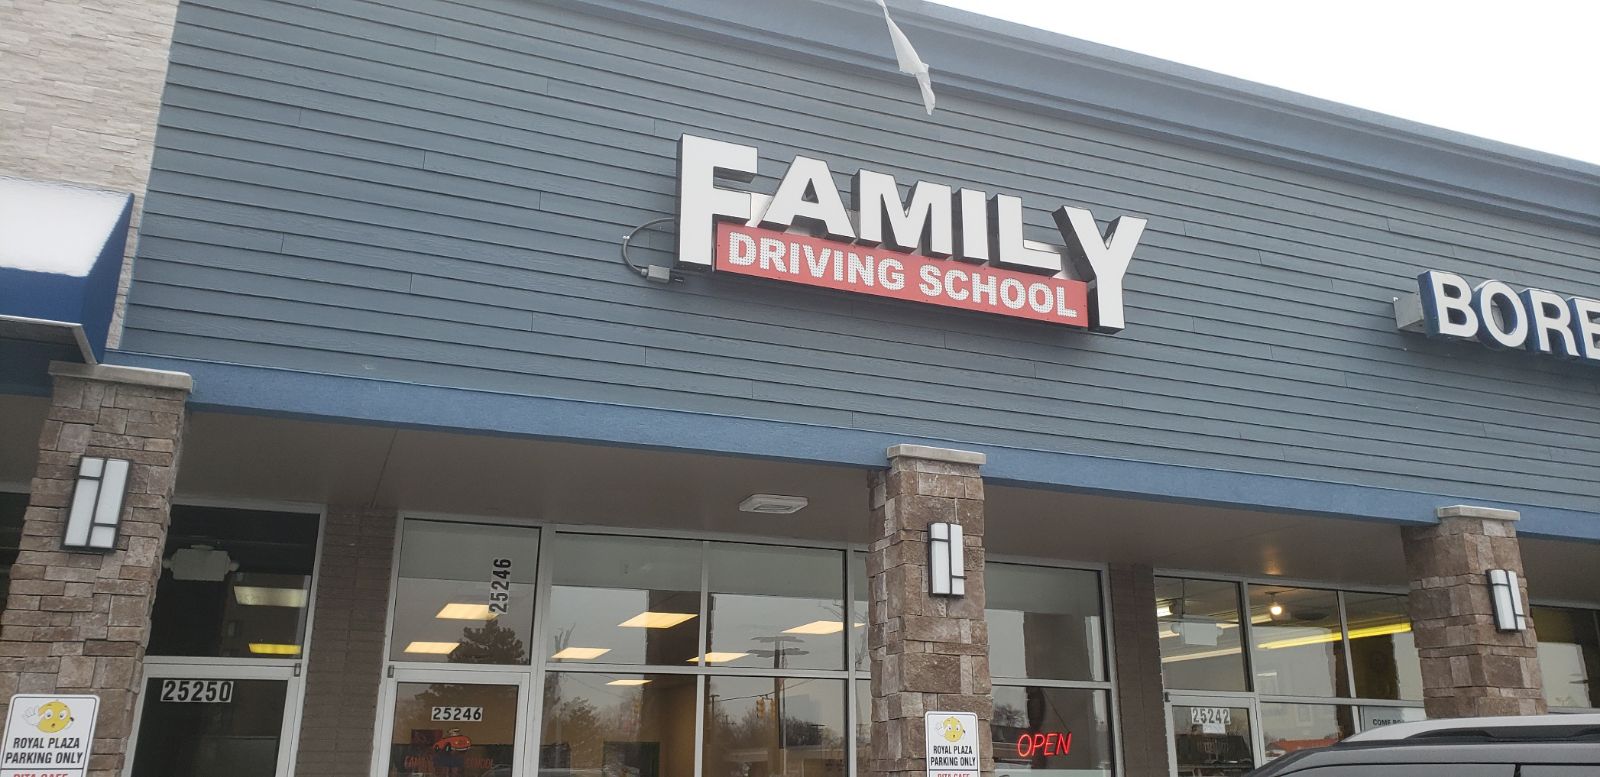 Family Driving School